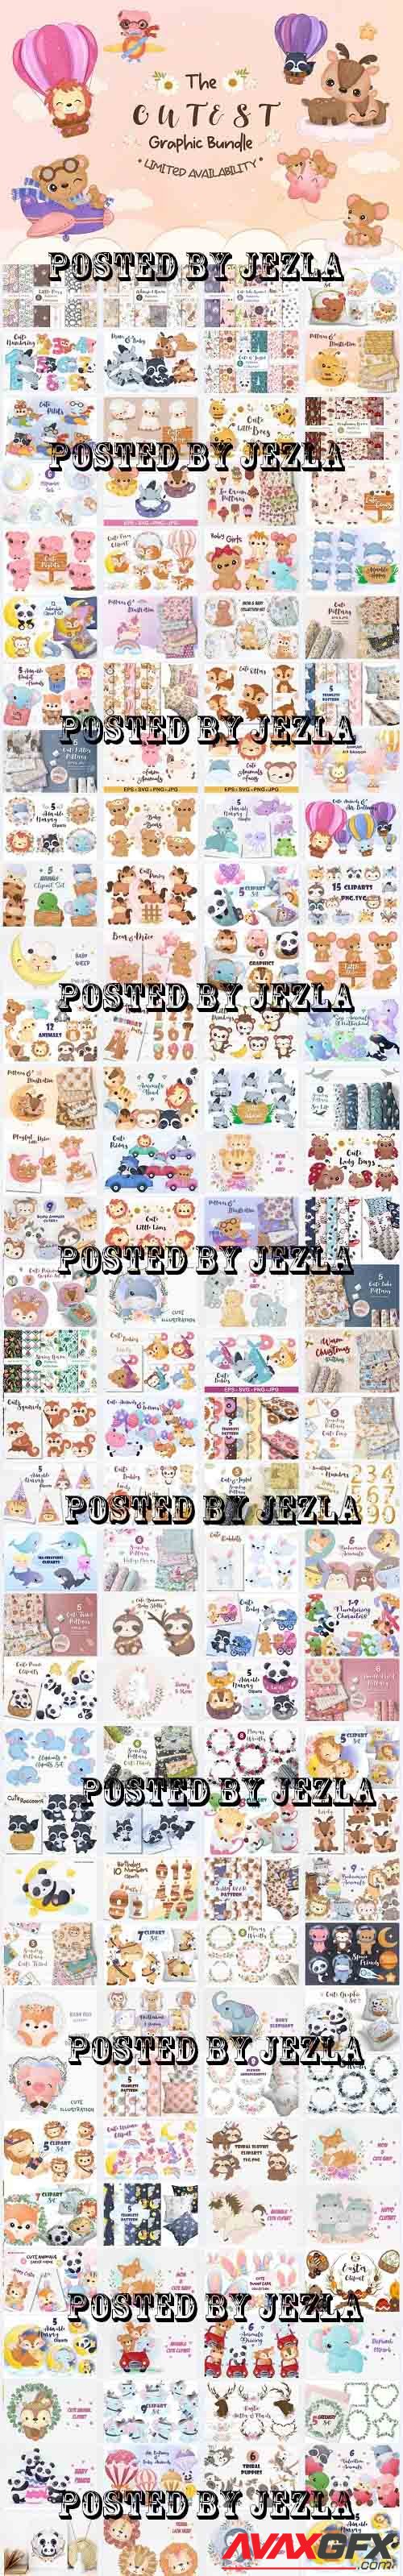 Cute Animals & Patterns Bundle - 139 Premium Graphics